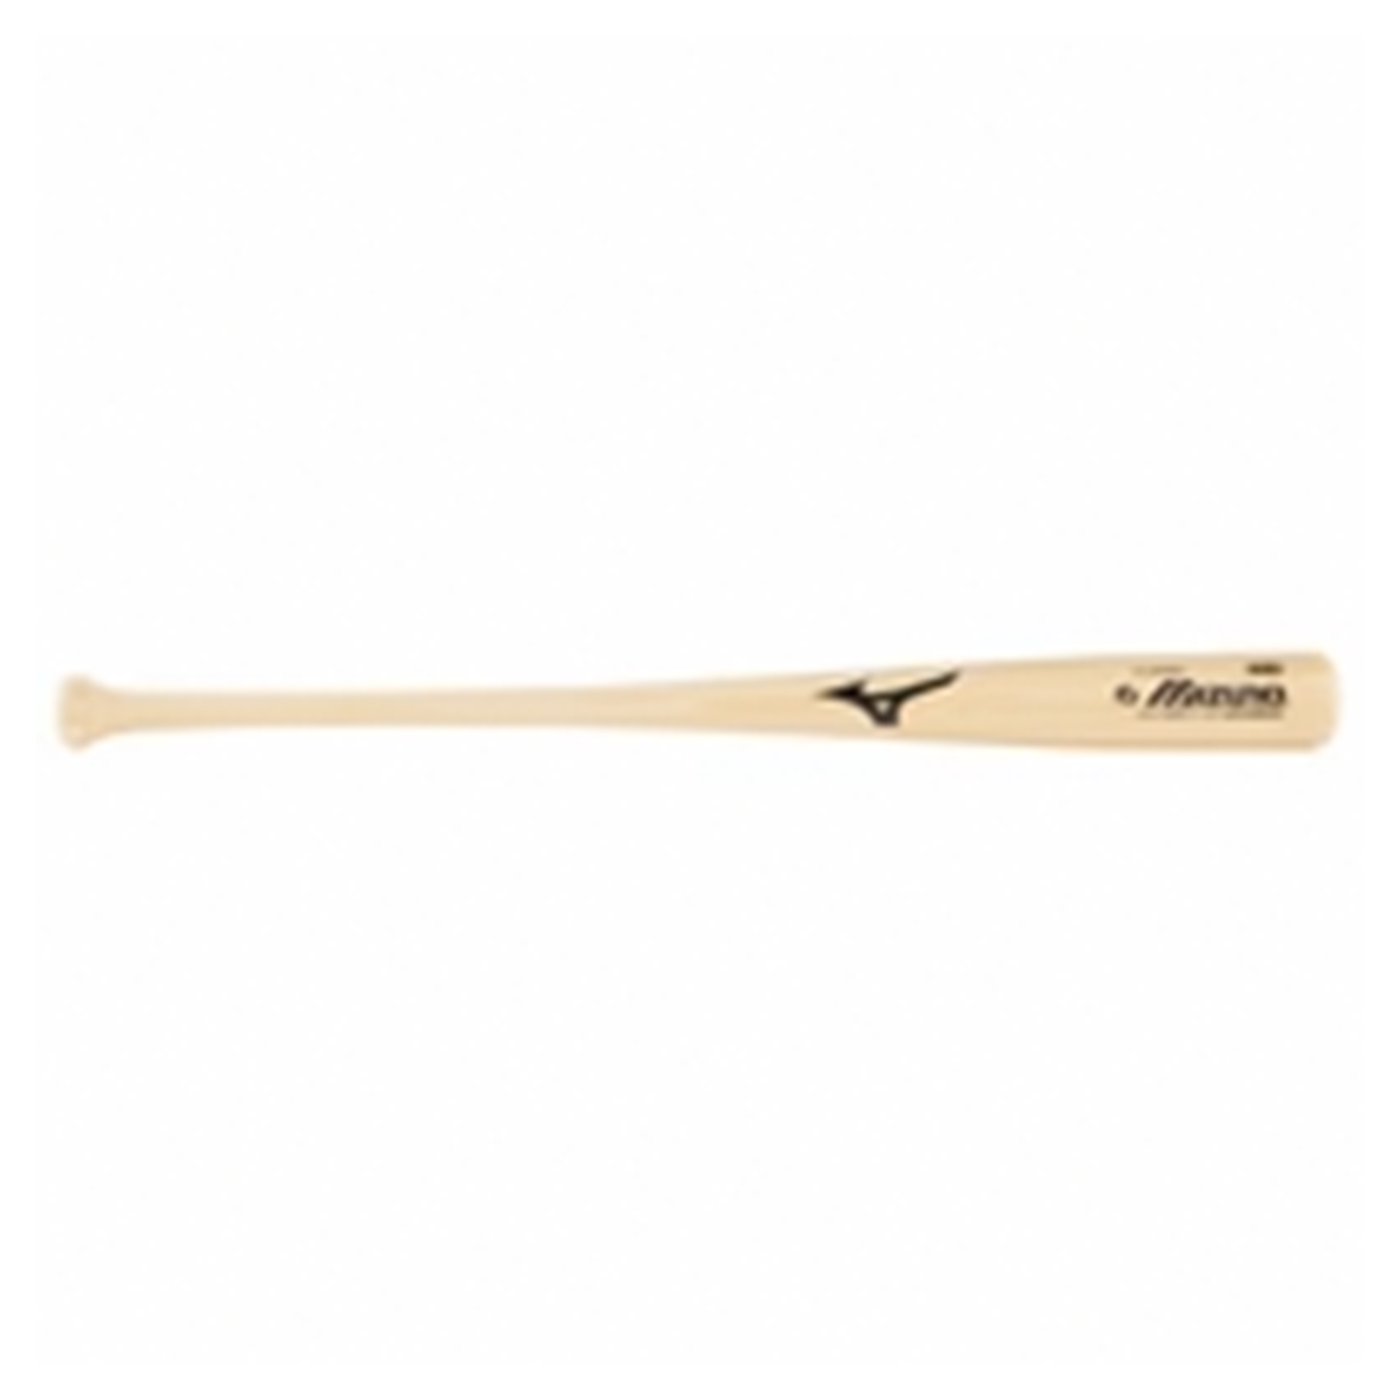 Mizuno Bamboo Classic 271 Wood Bat